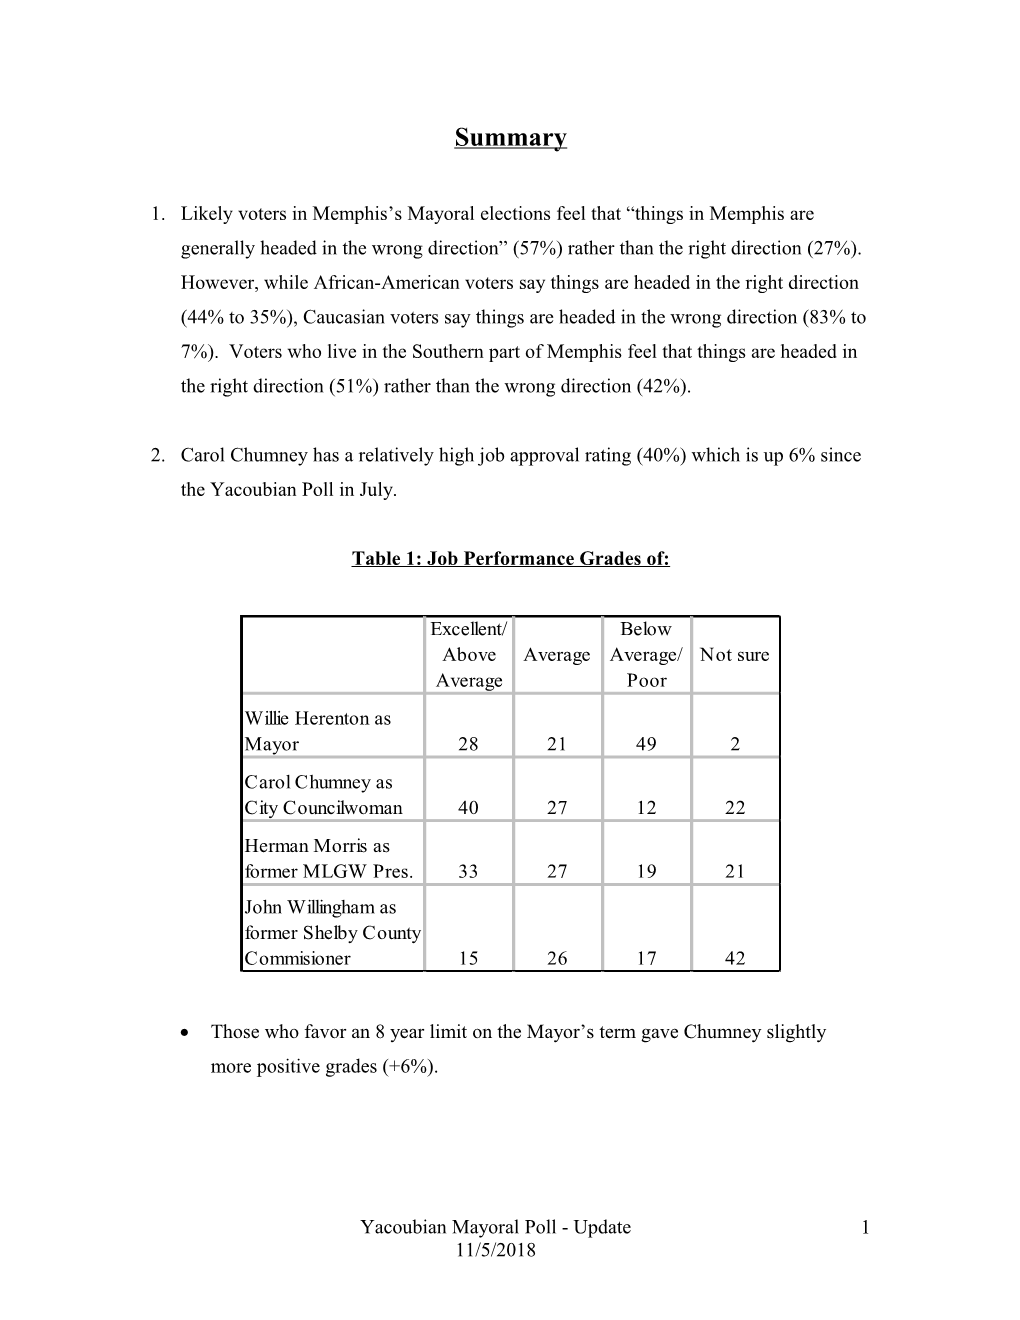 Table 1: Job Performance Grades Of